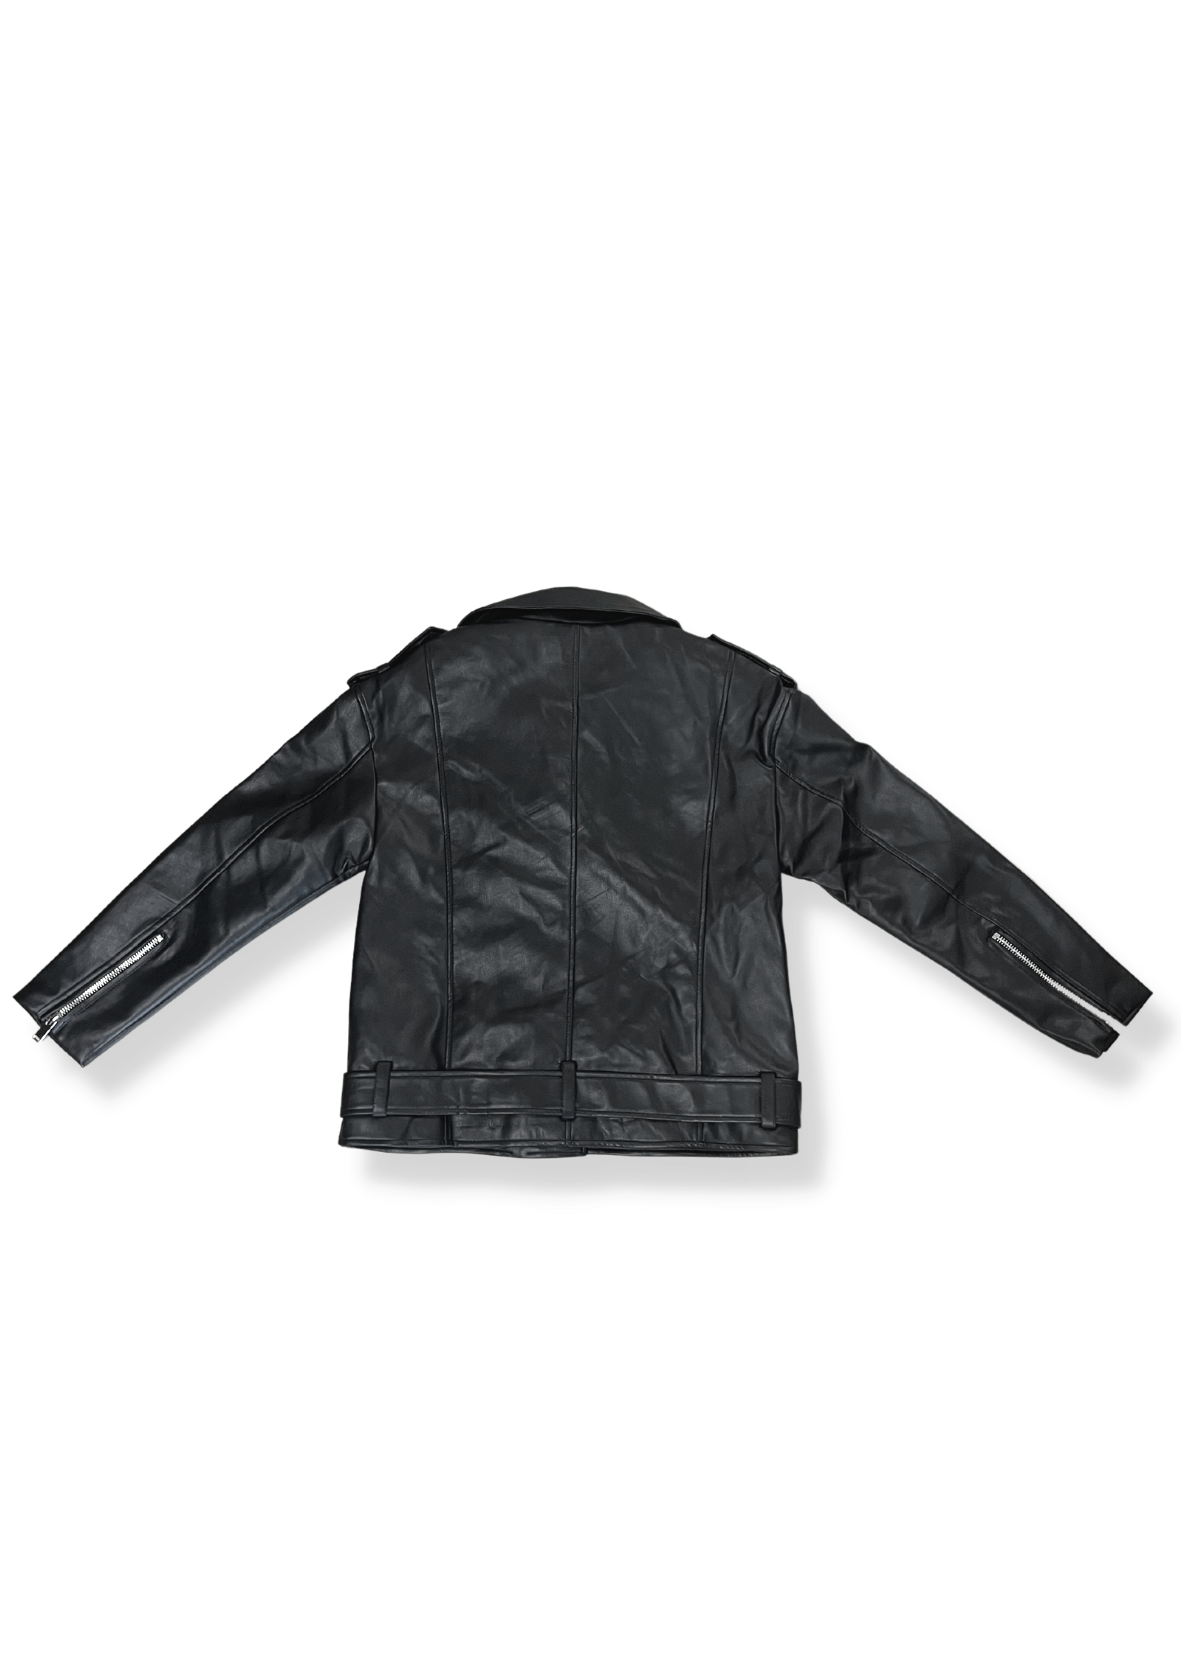 Oversized biker jacket black